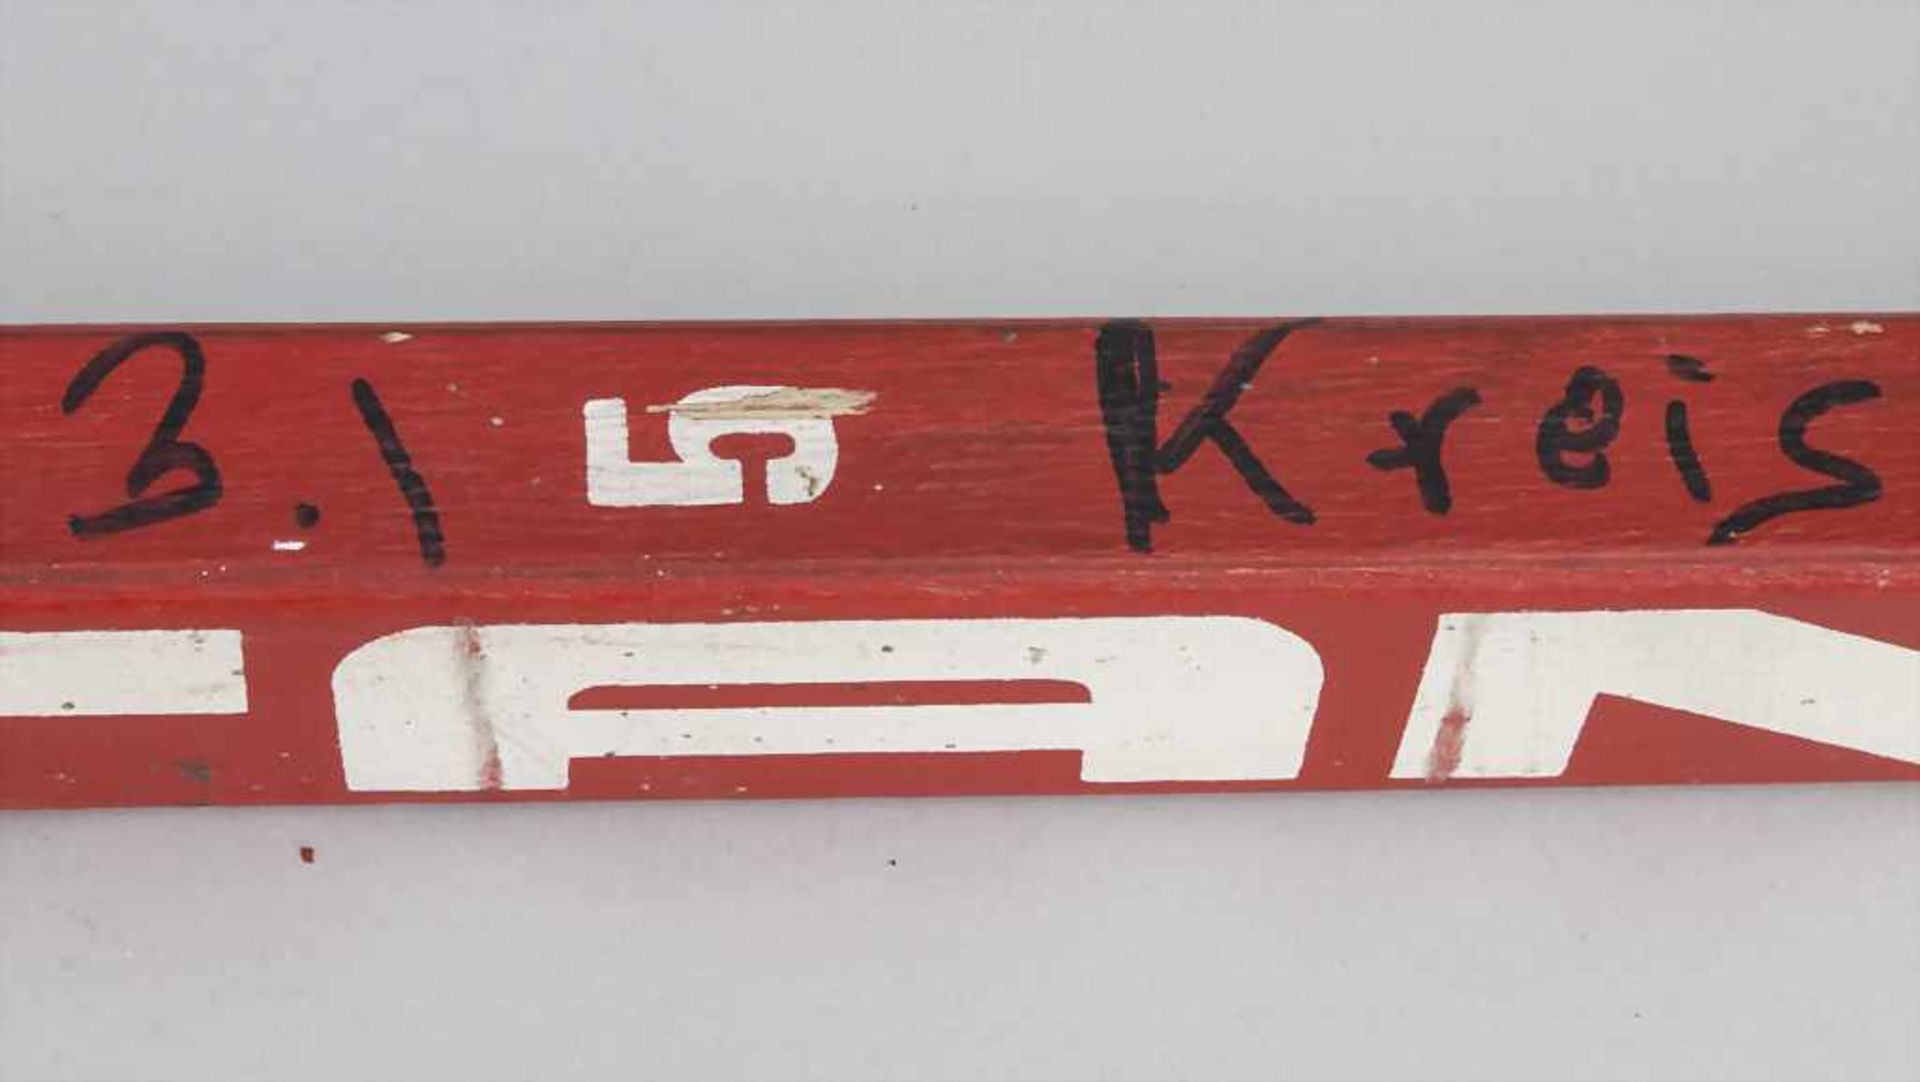 Original Eishockey Schläger, Harold Kreis, MERC Adler Mannheim, 1995< - Image 2 of 3